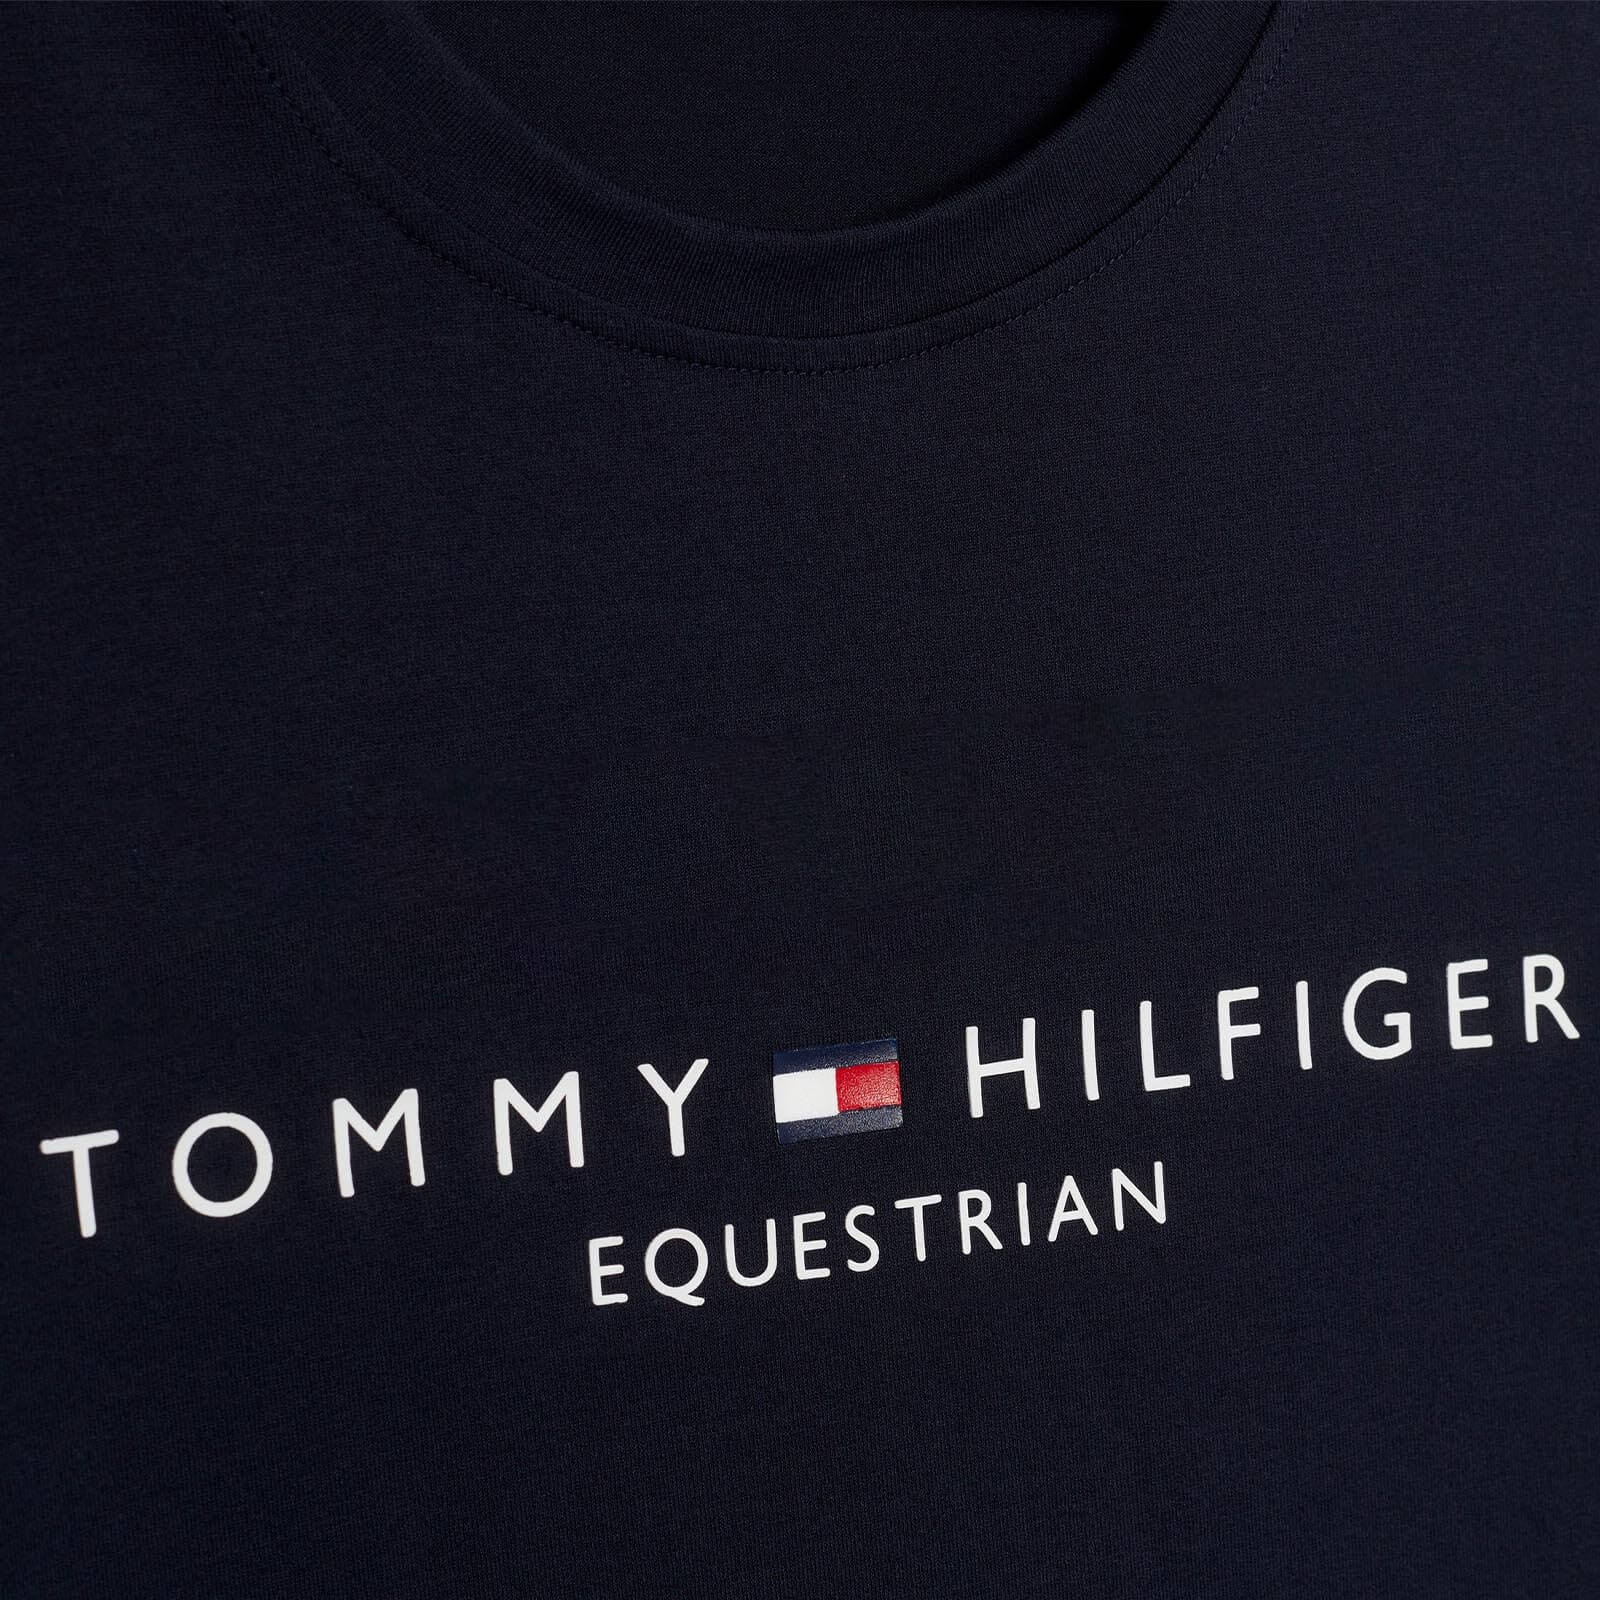 Tommy Hilfiger Equestrian T-Shirt Herren Williamsburg Short Sleeve Graphic T-Shirt FS 2024 Desert Sky L